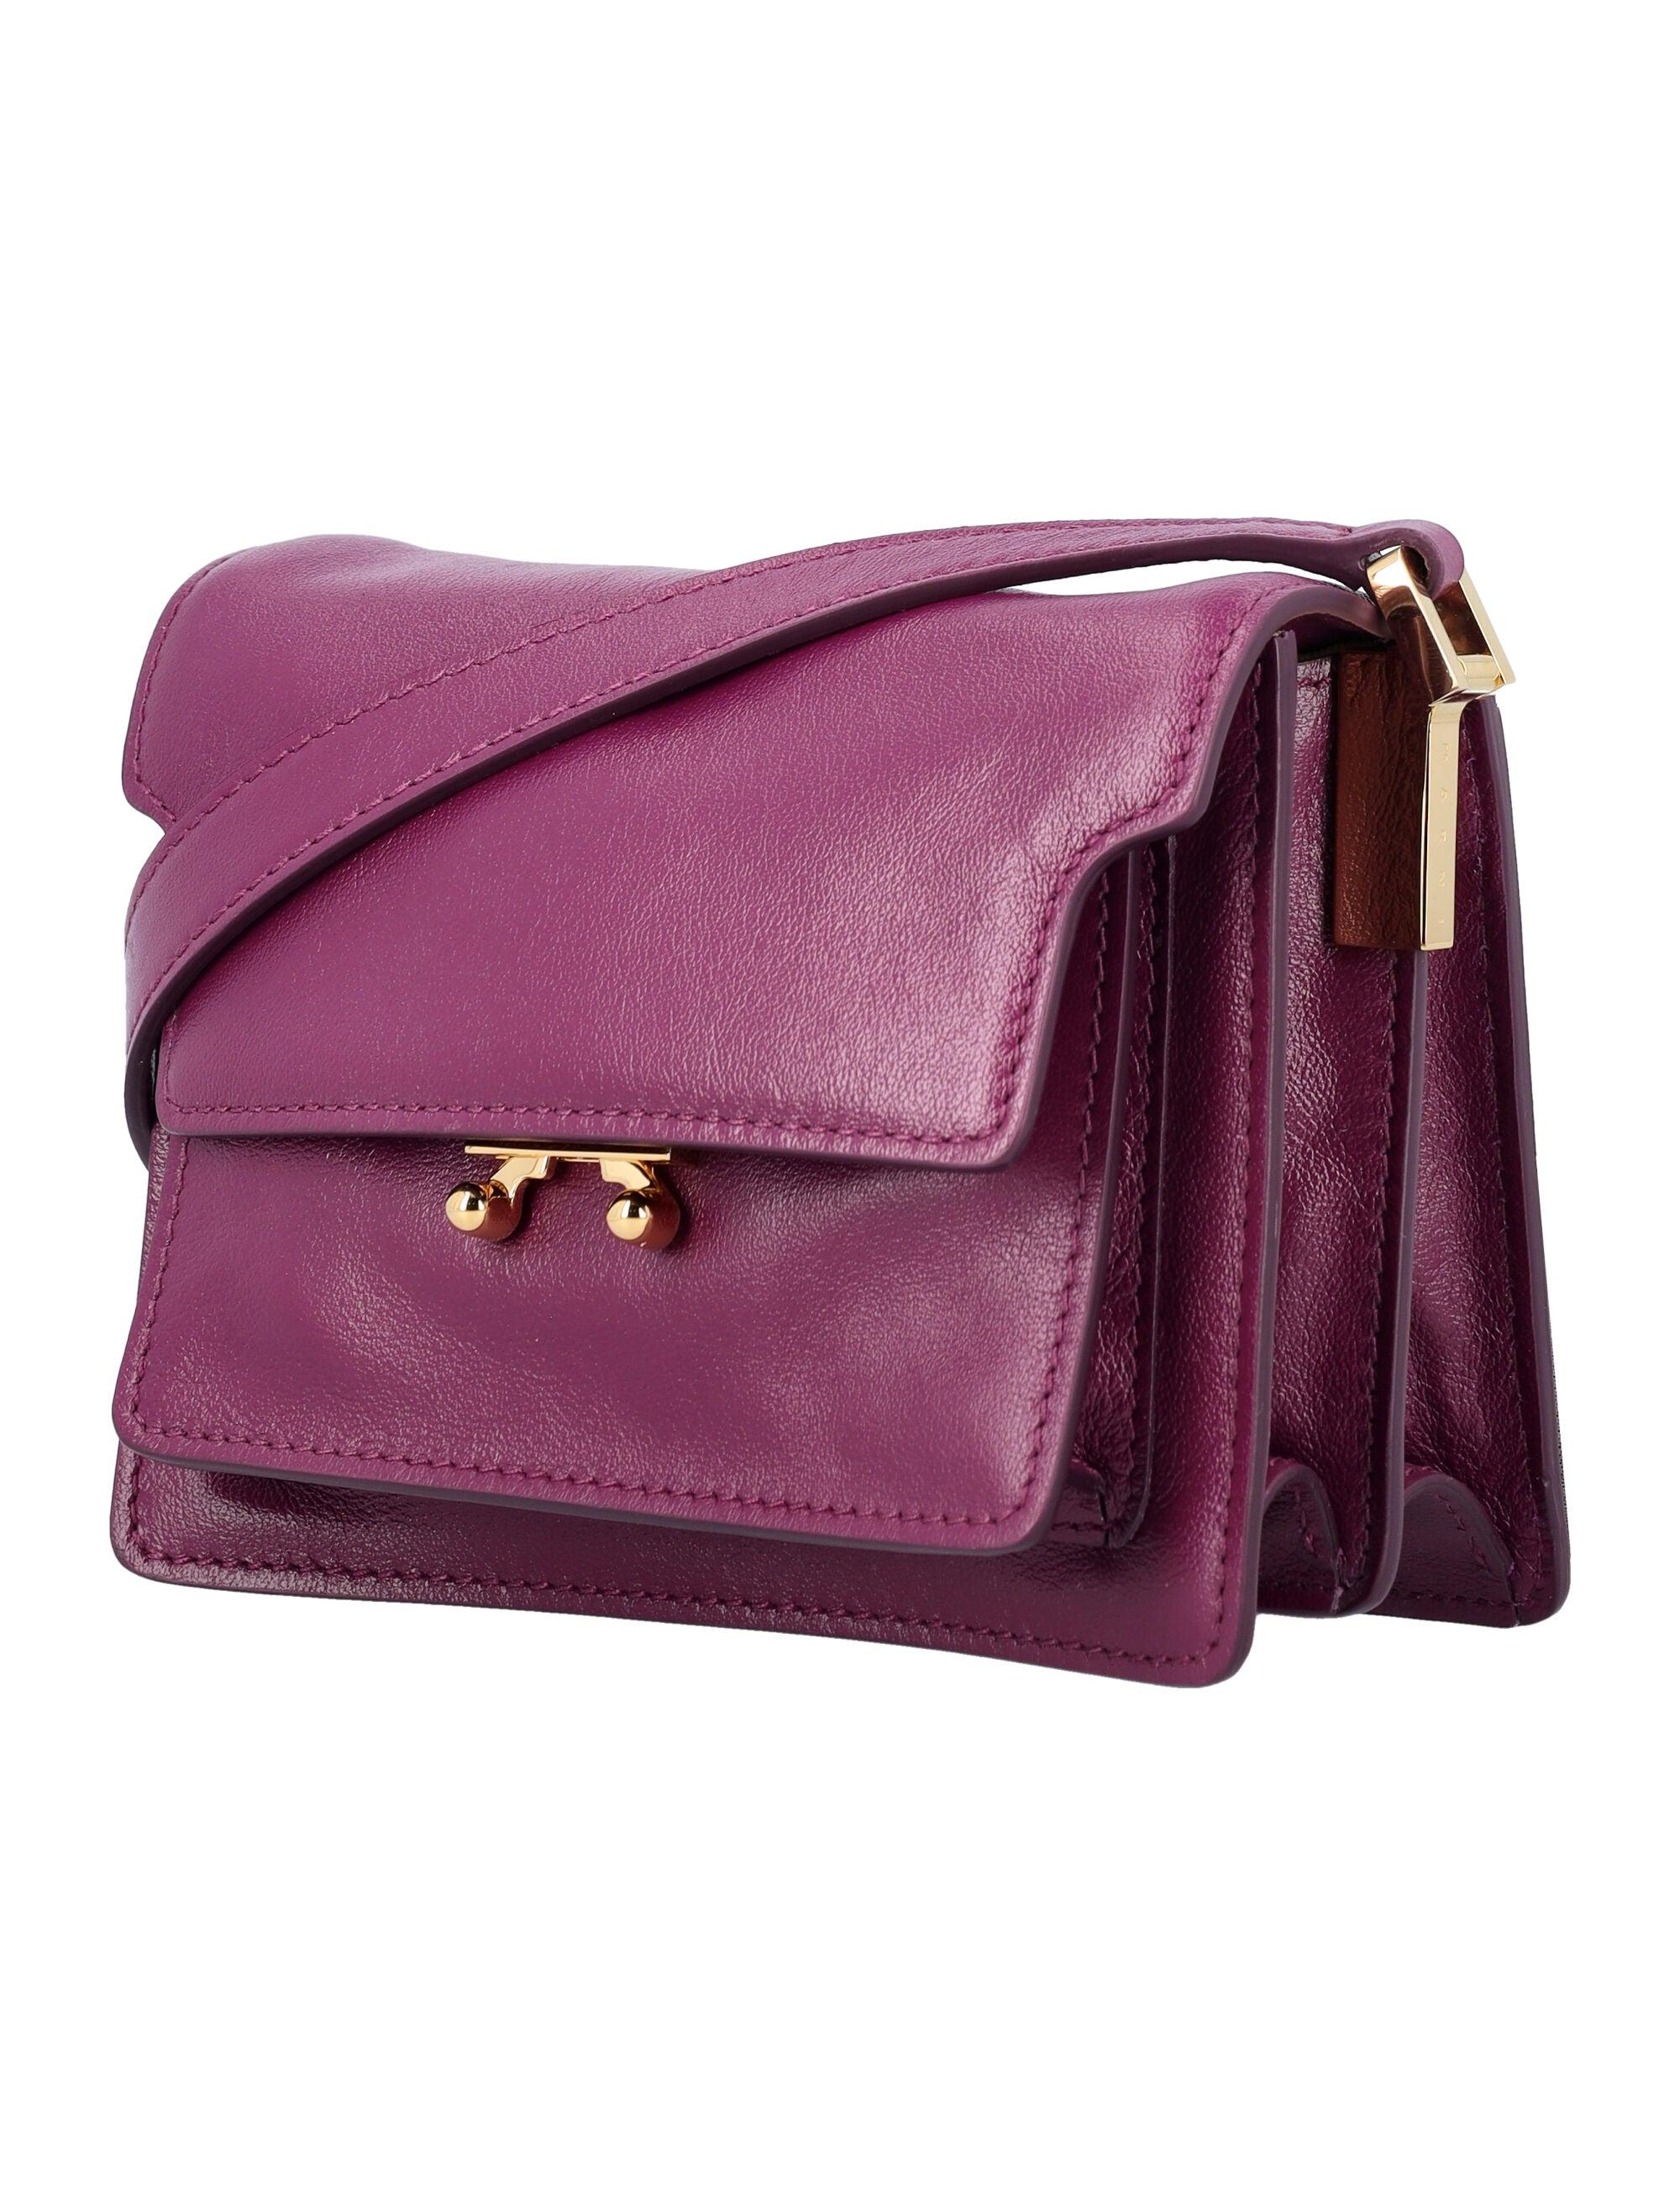 Marni Trunk Mini Leather Shoulder Bag in Purple